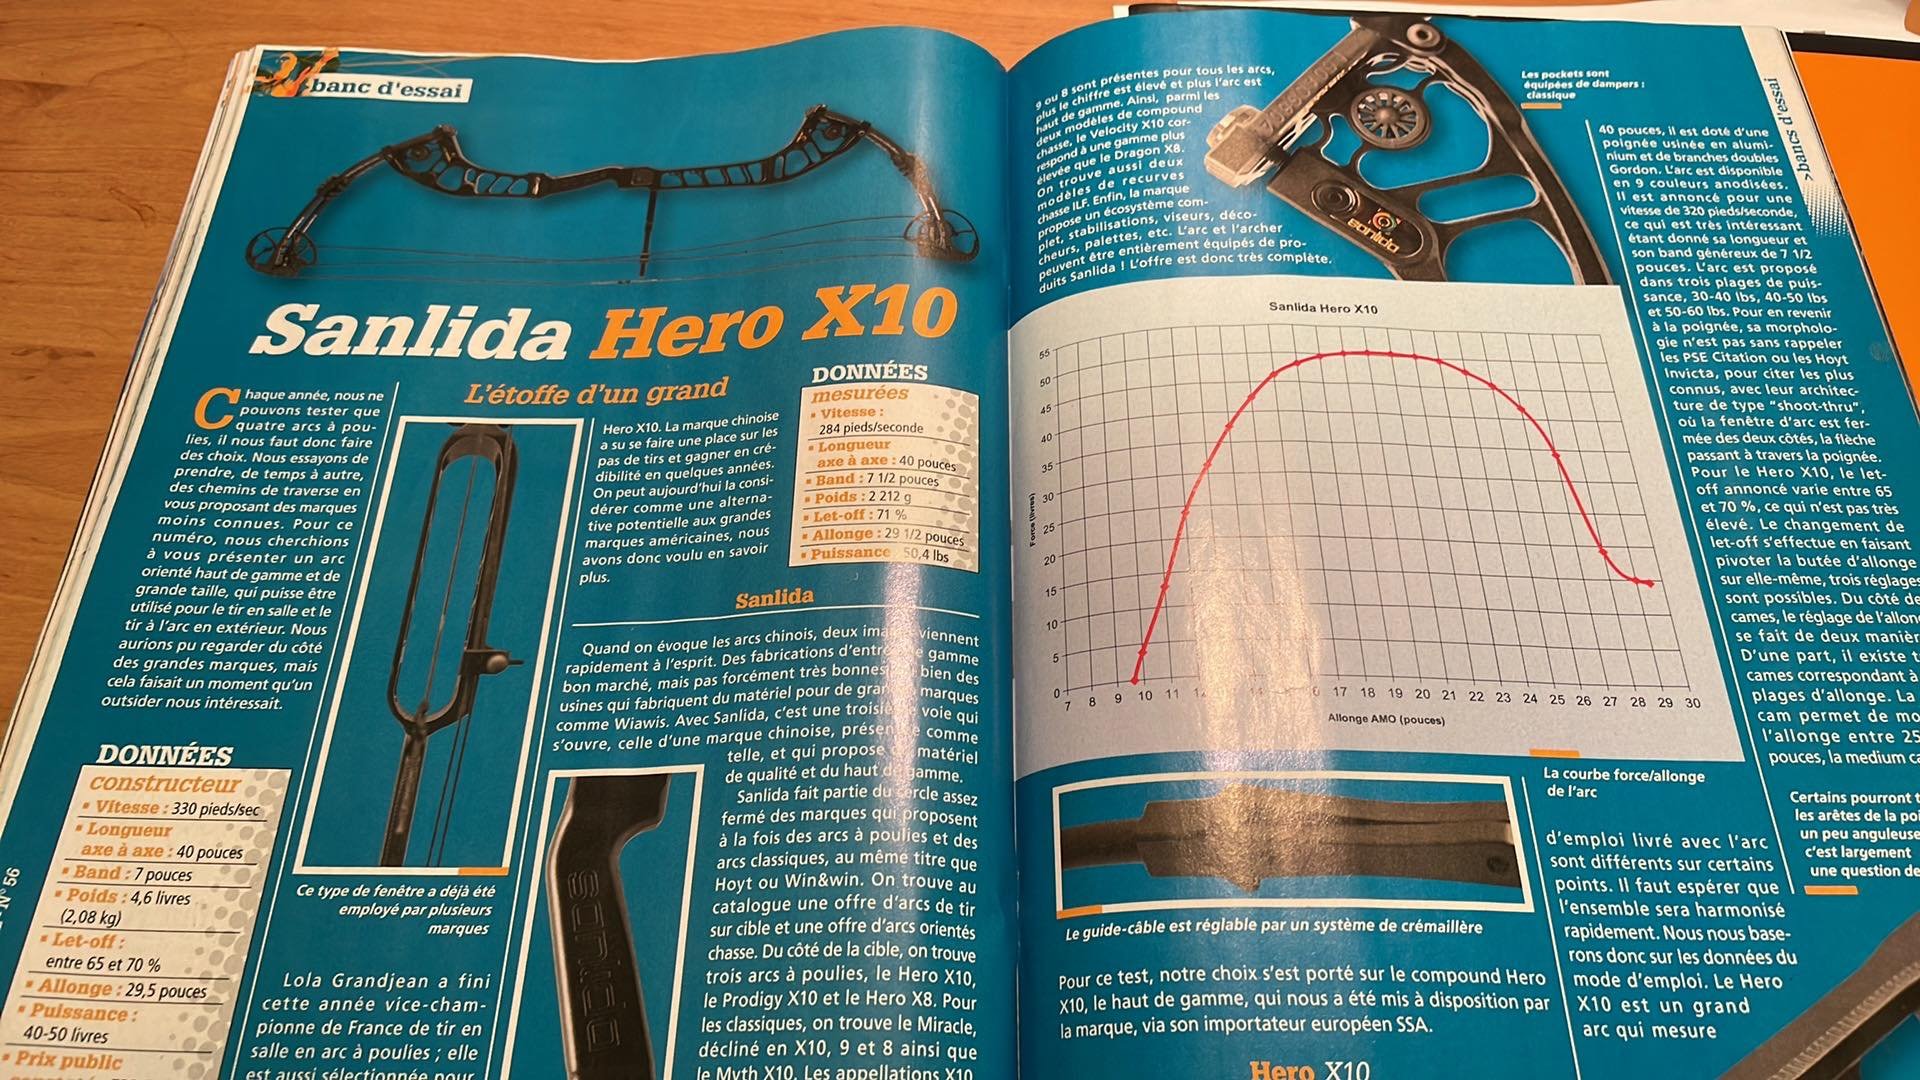 Hero X10 on Tir à l'Arc Magazine